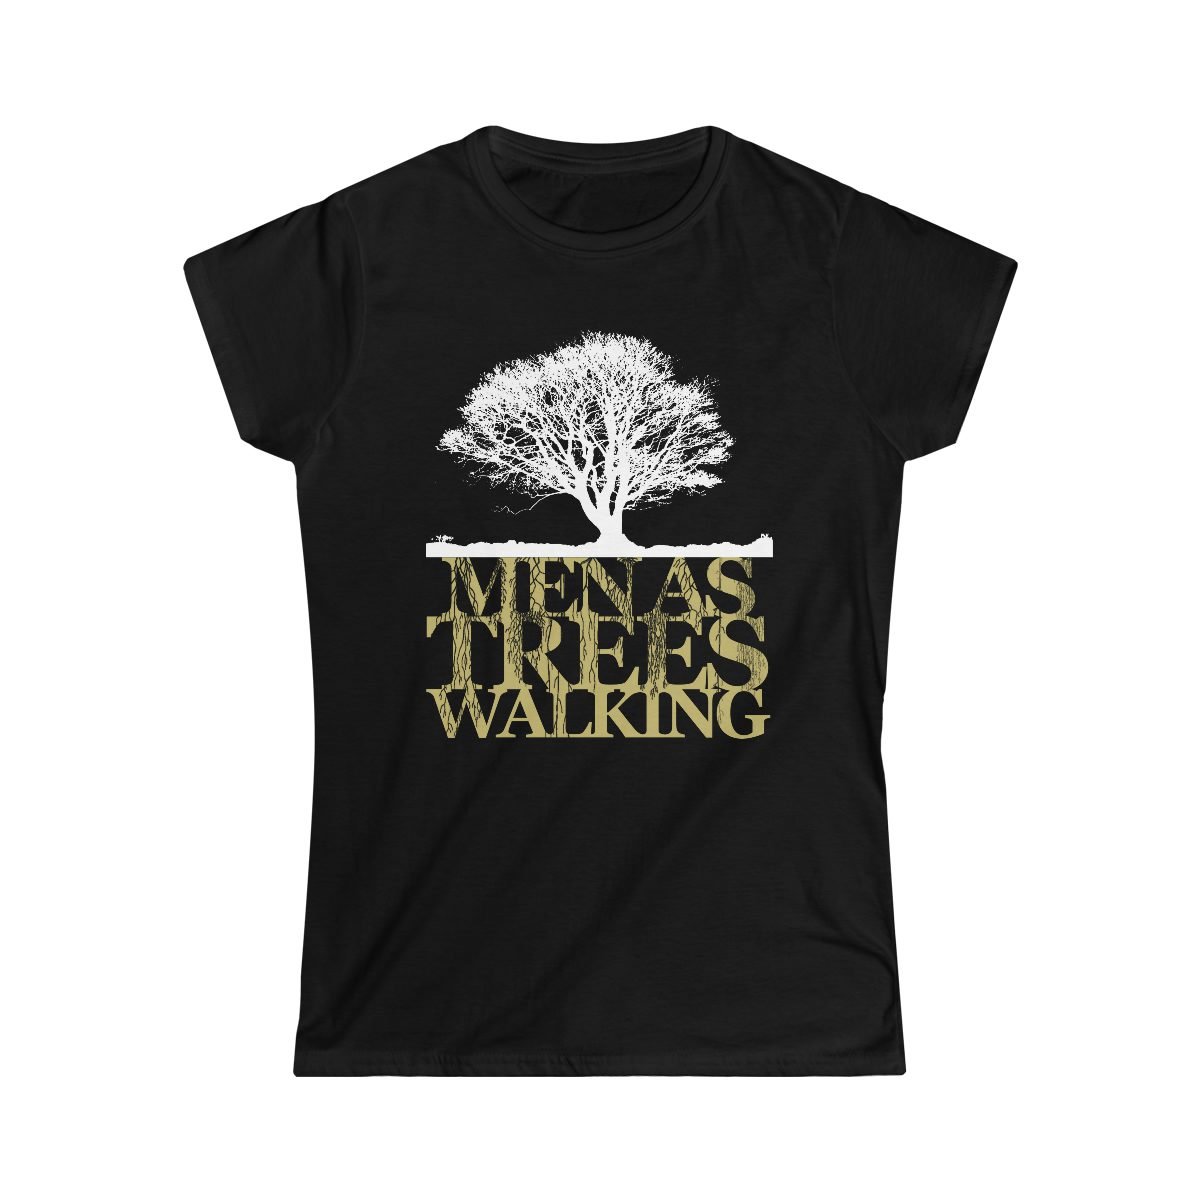 Men As Trees Walking Women’s Short Sleeve Tshirt